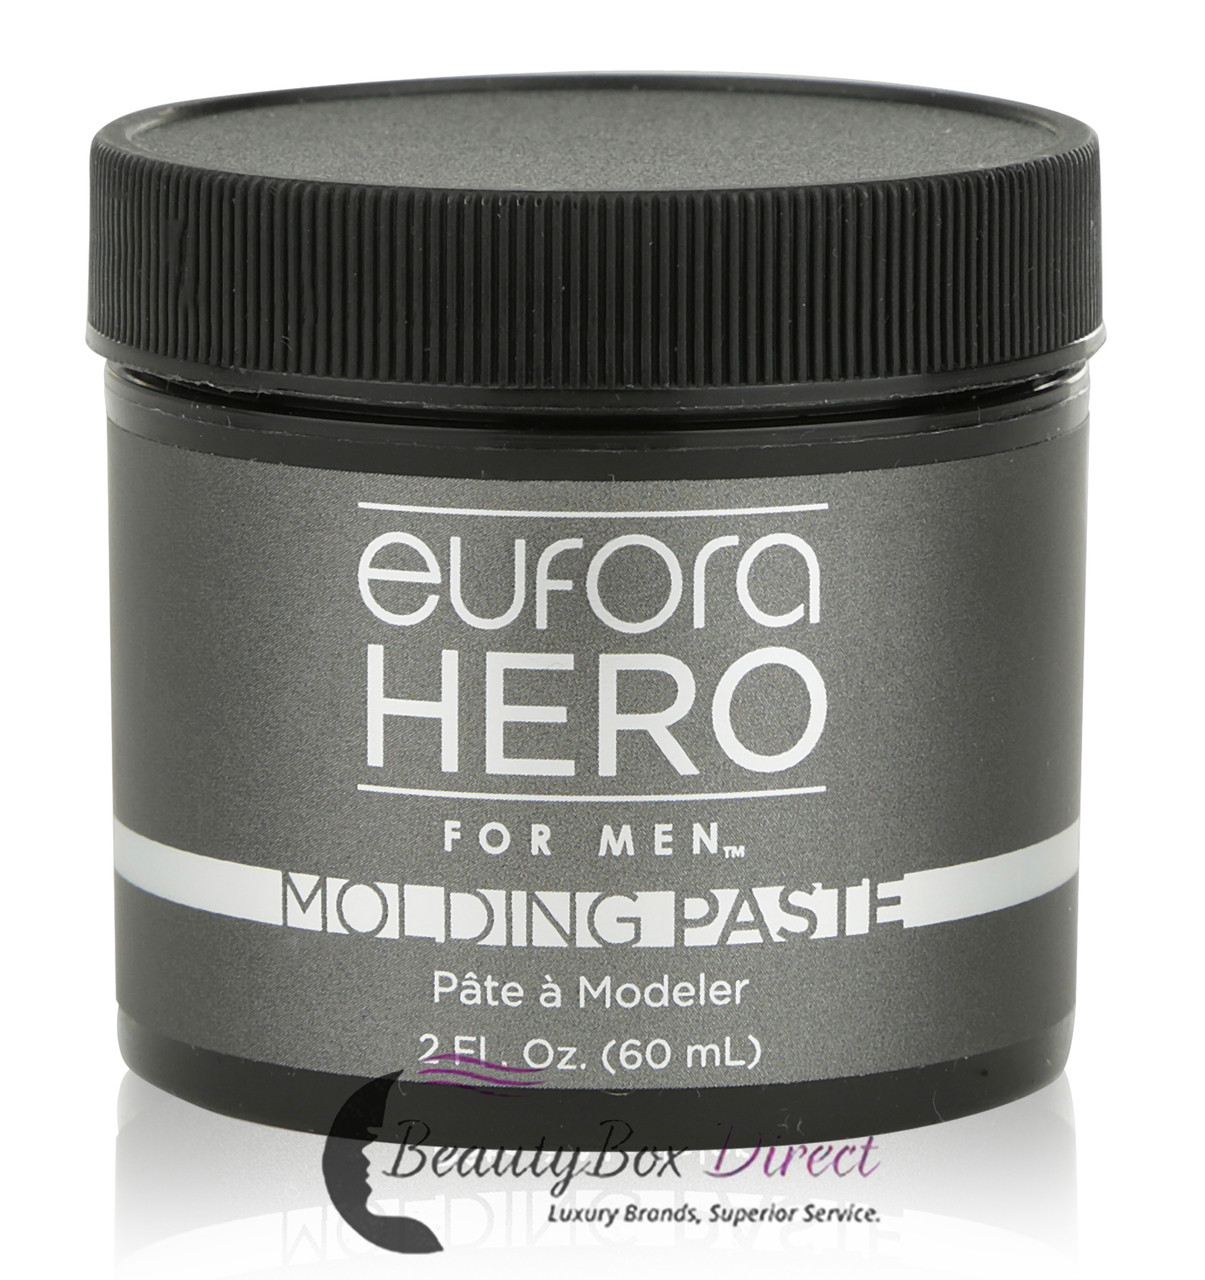 Eufora Hero for Men Molding Paste 2 oz